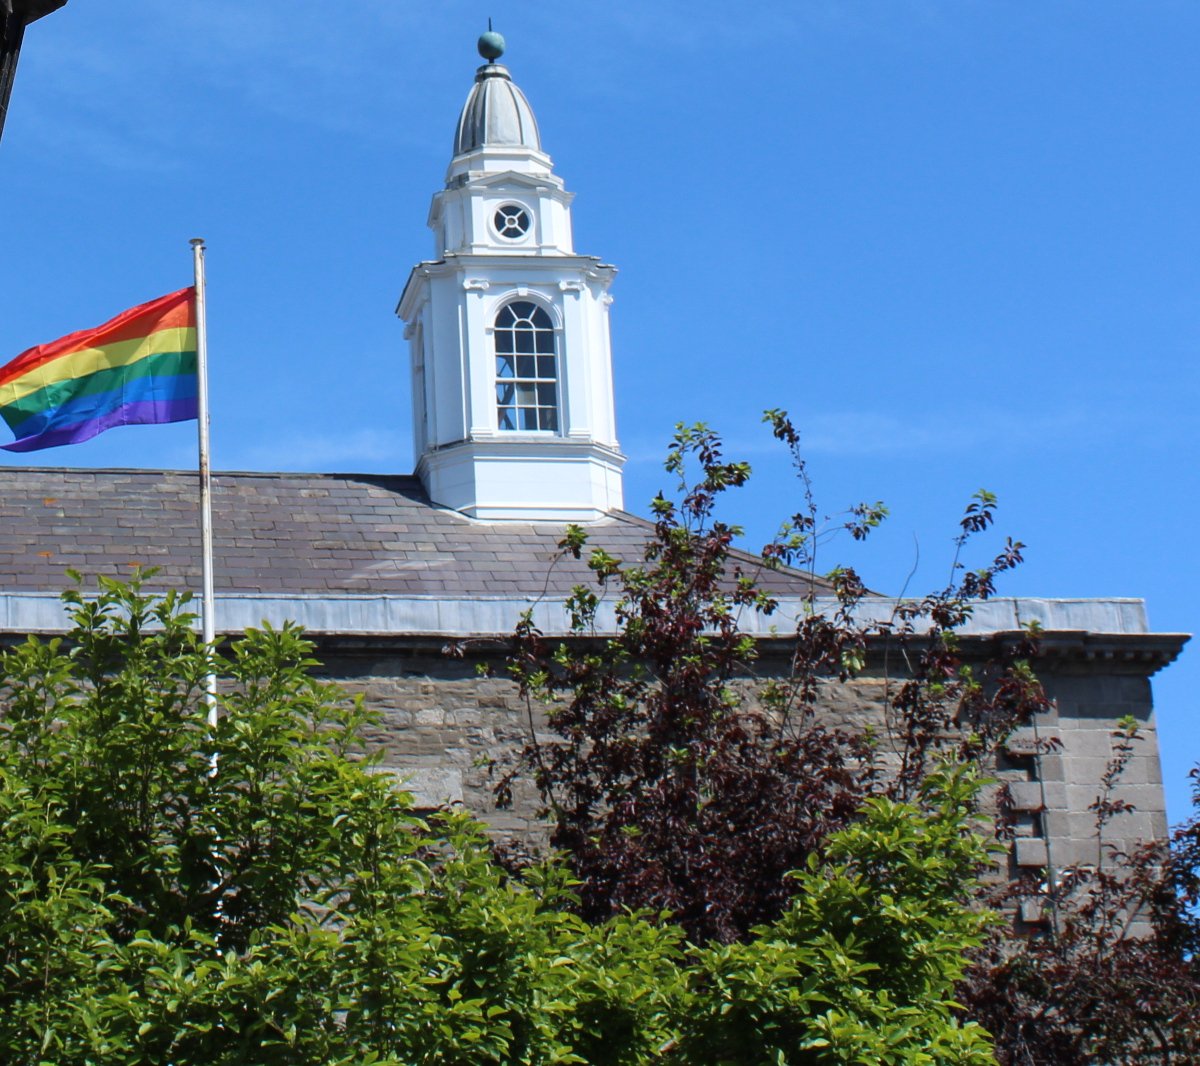 In pictures: Dublin Pride 2019